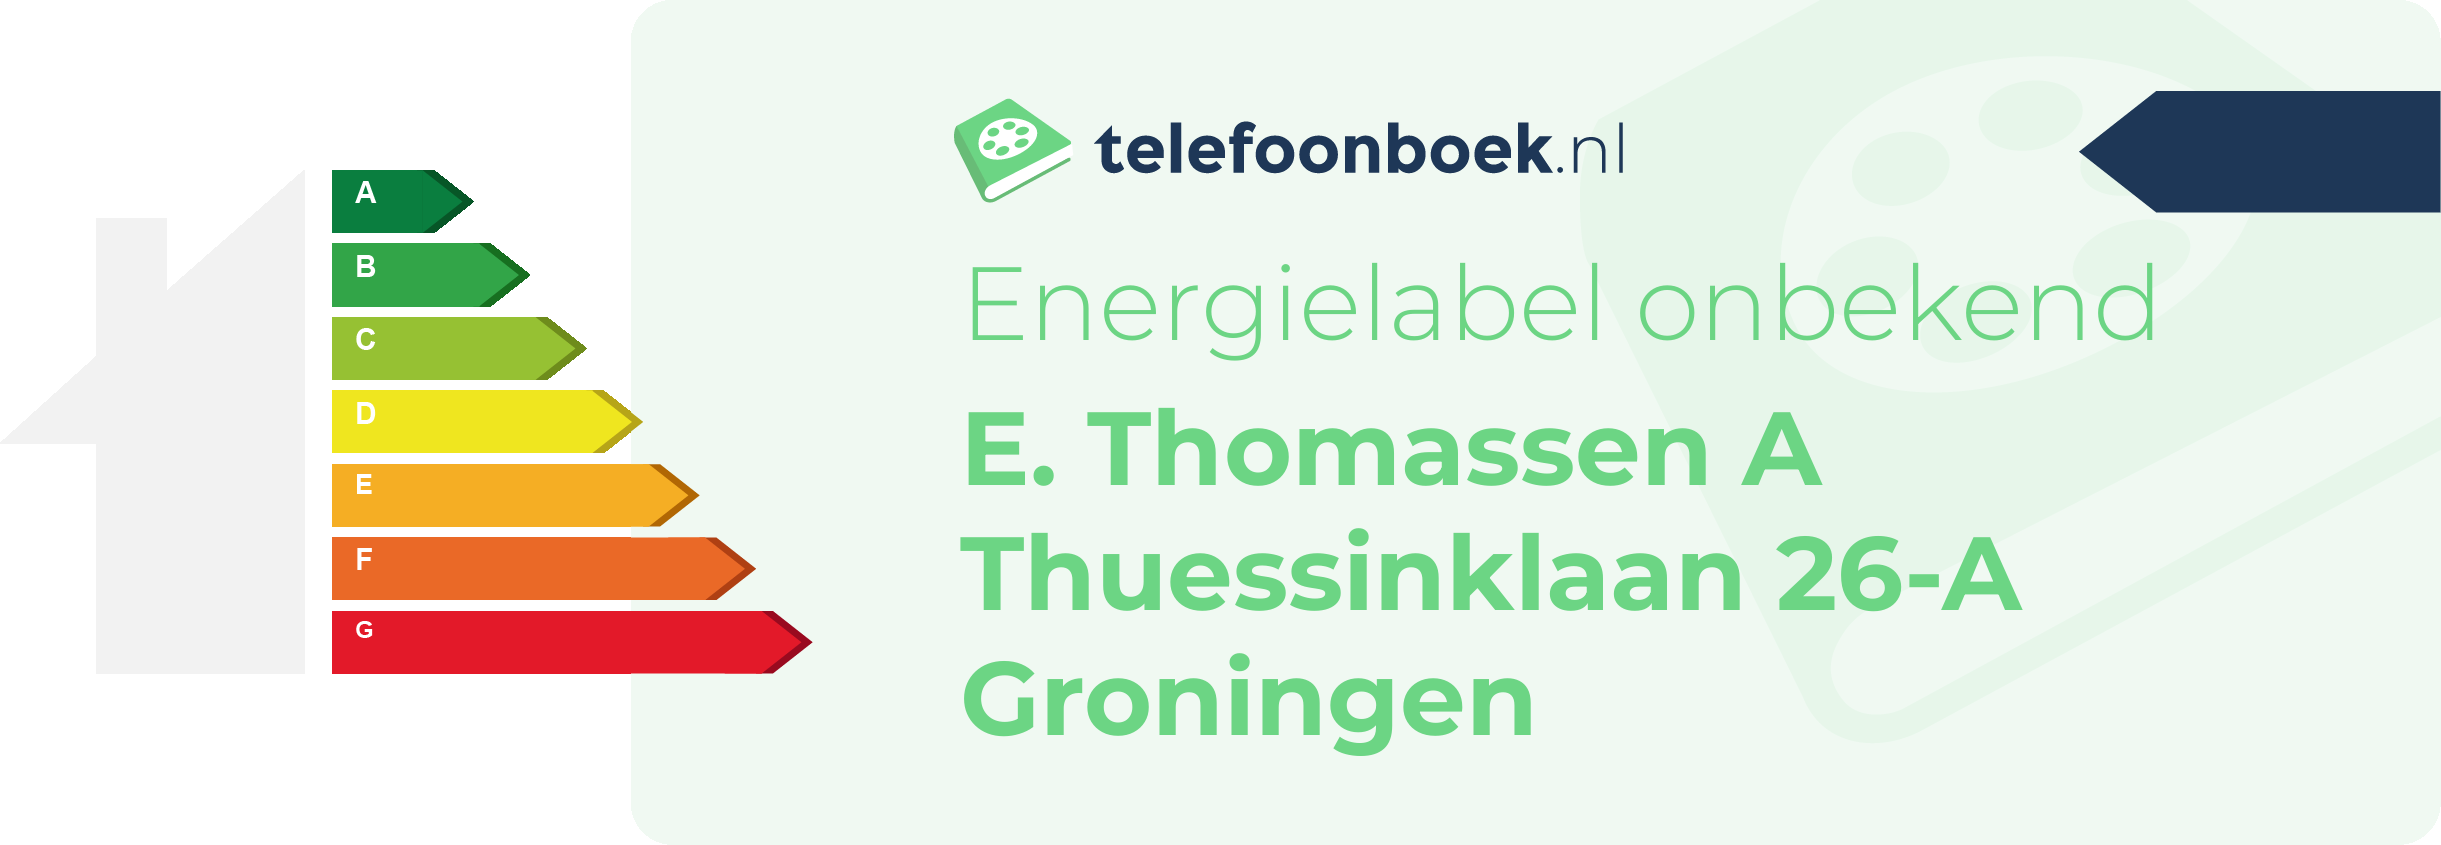 Energielabel E. Thomassen A Thuessinklaan 26-A Groningen